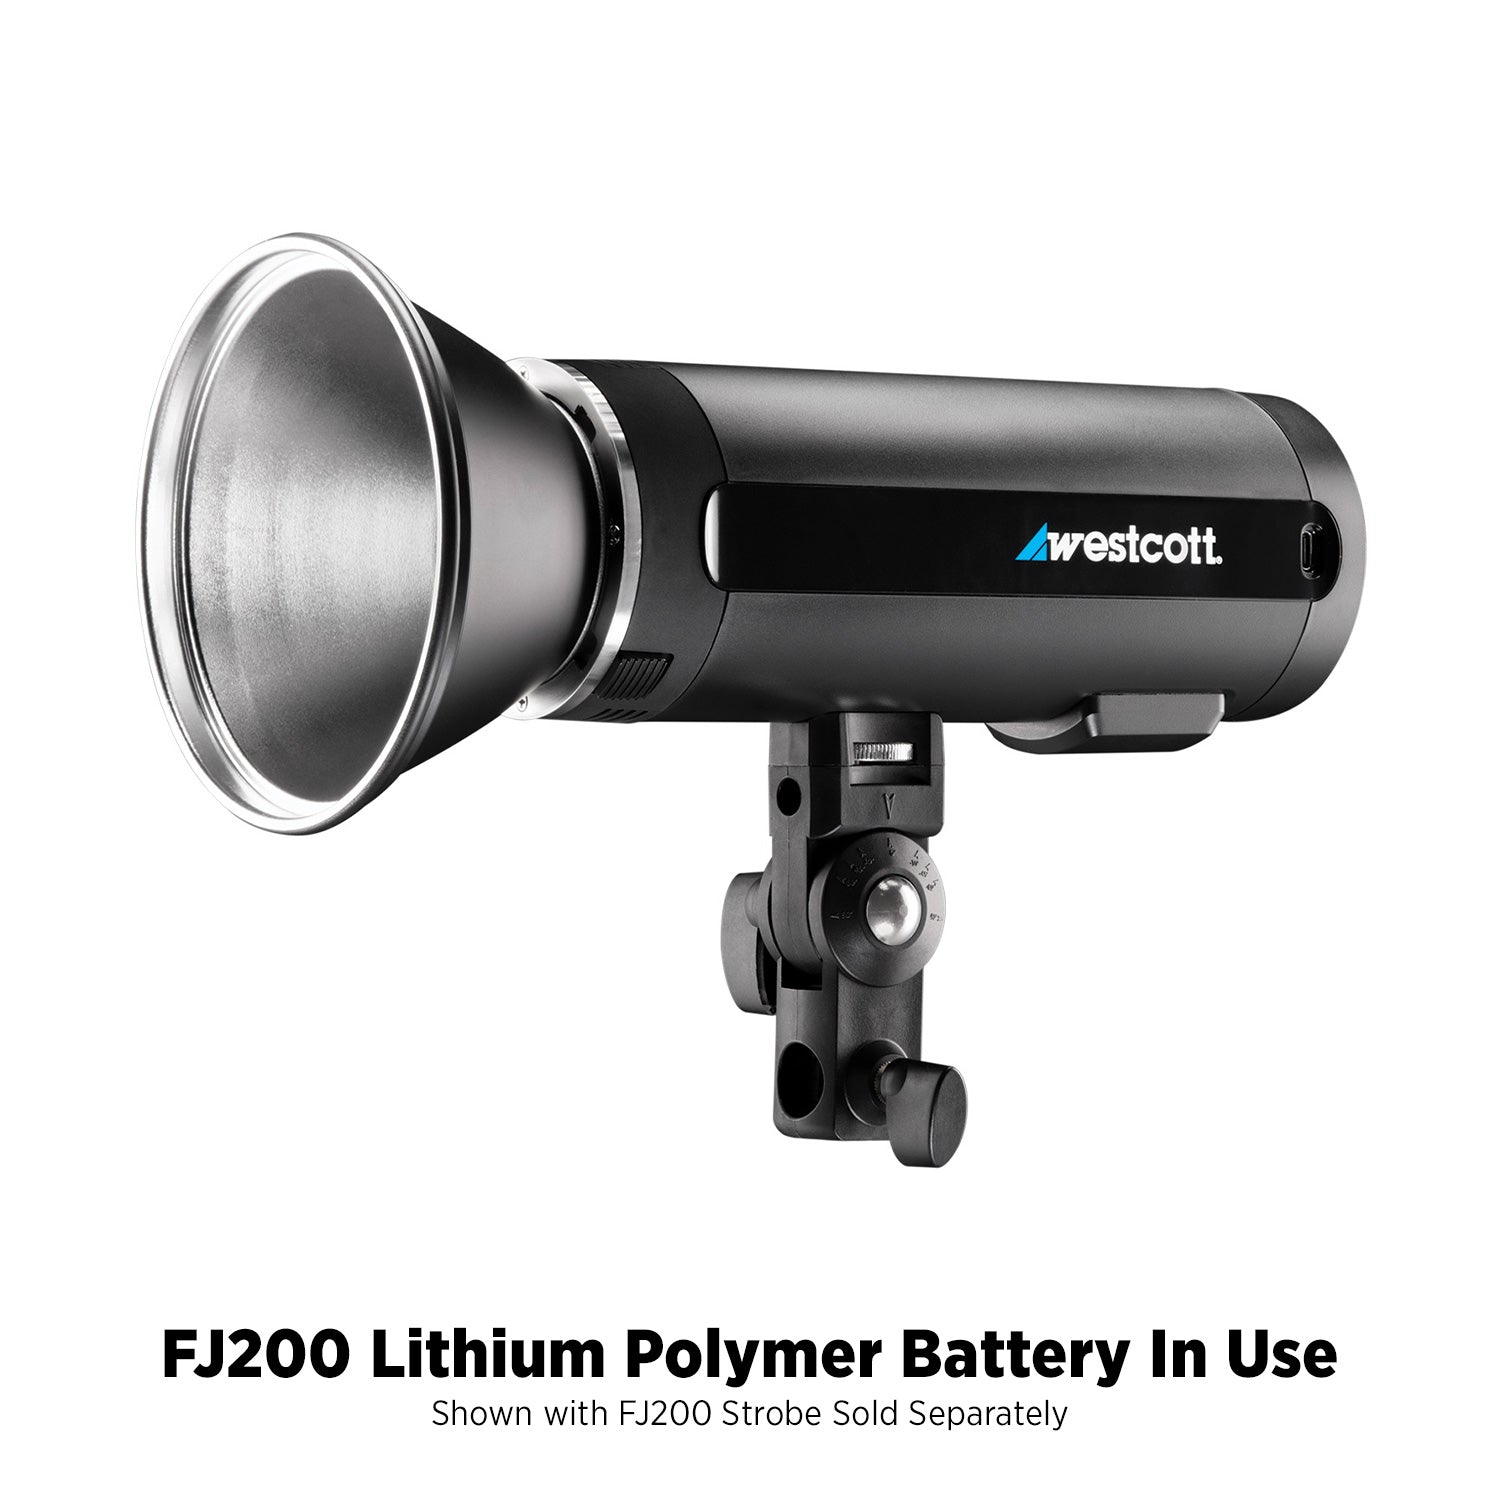 FJ200 Lithium Polymer Battery